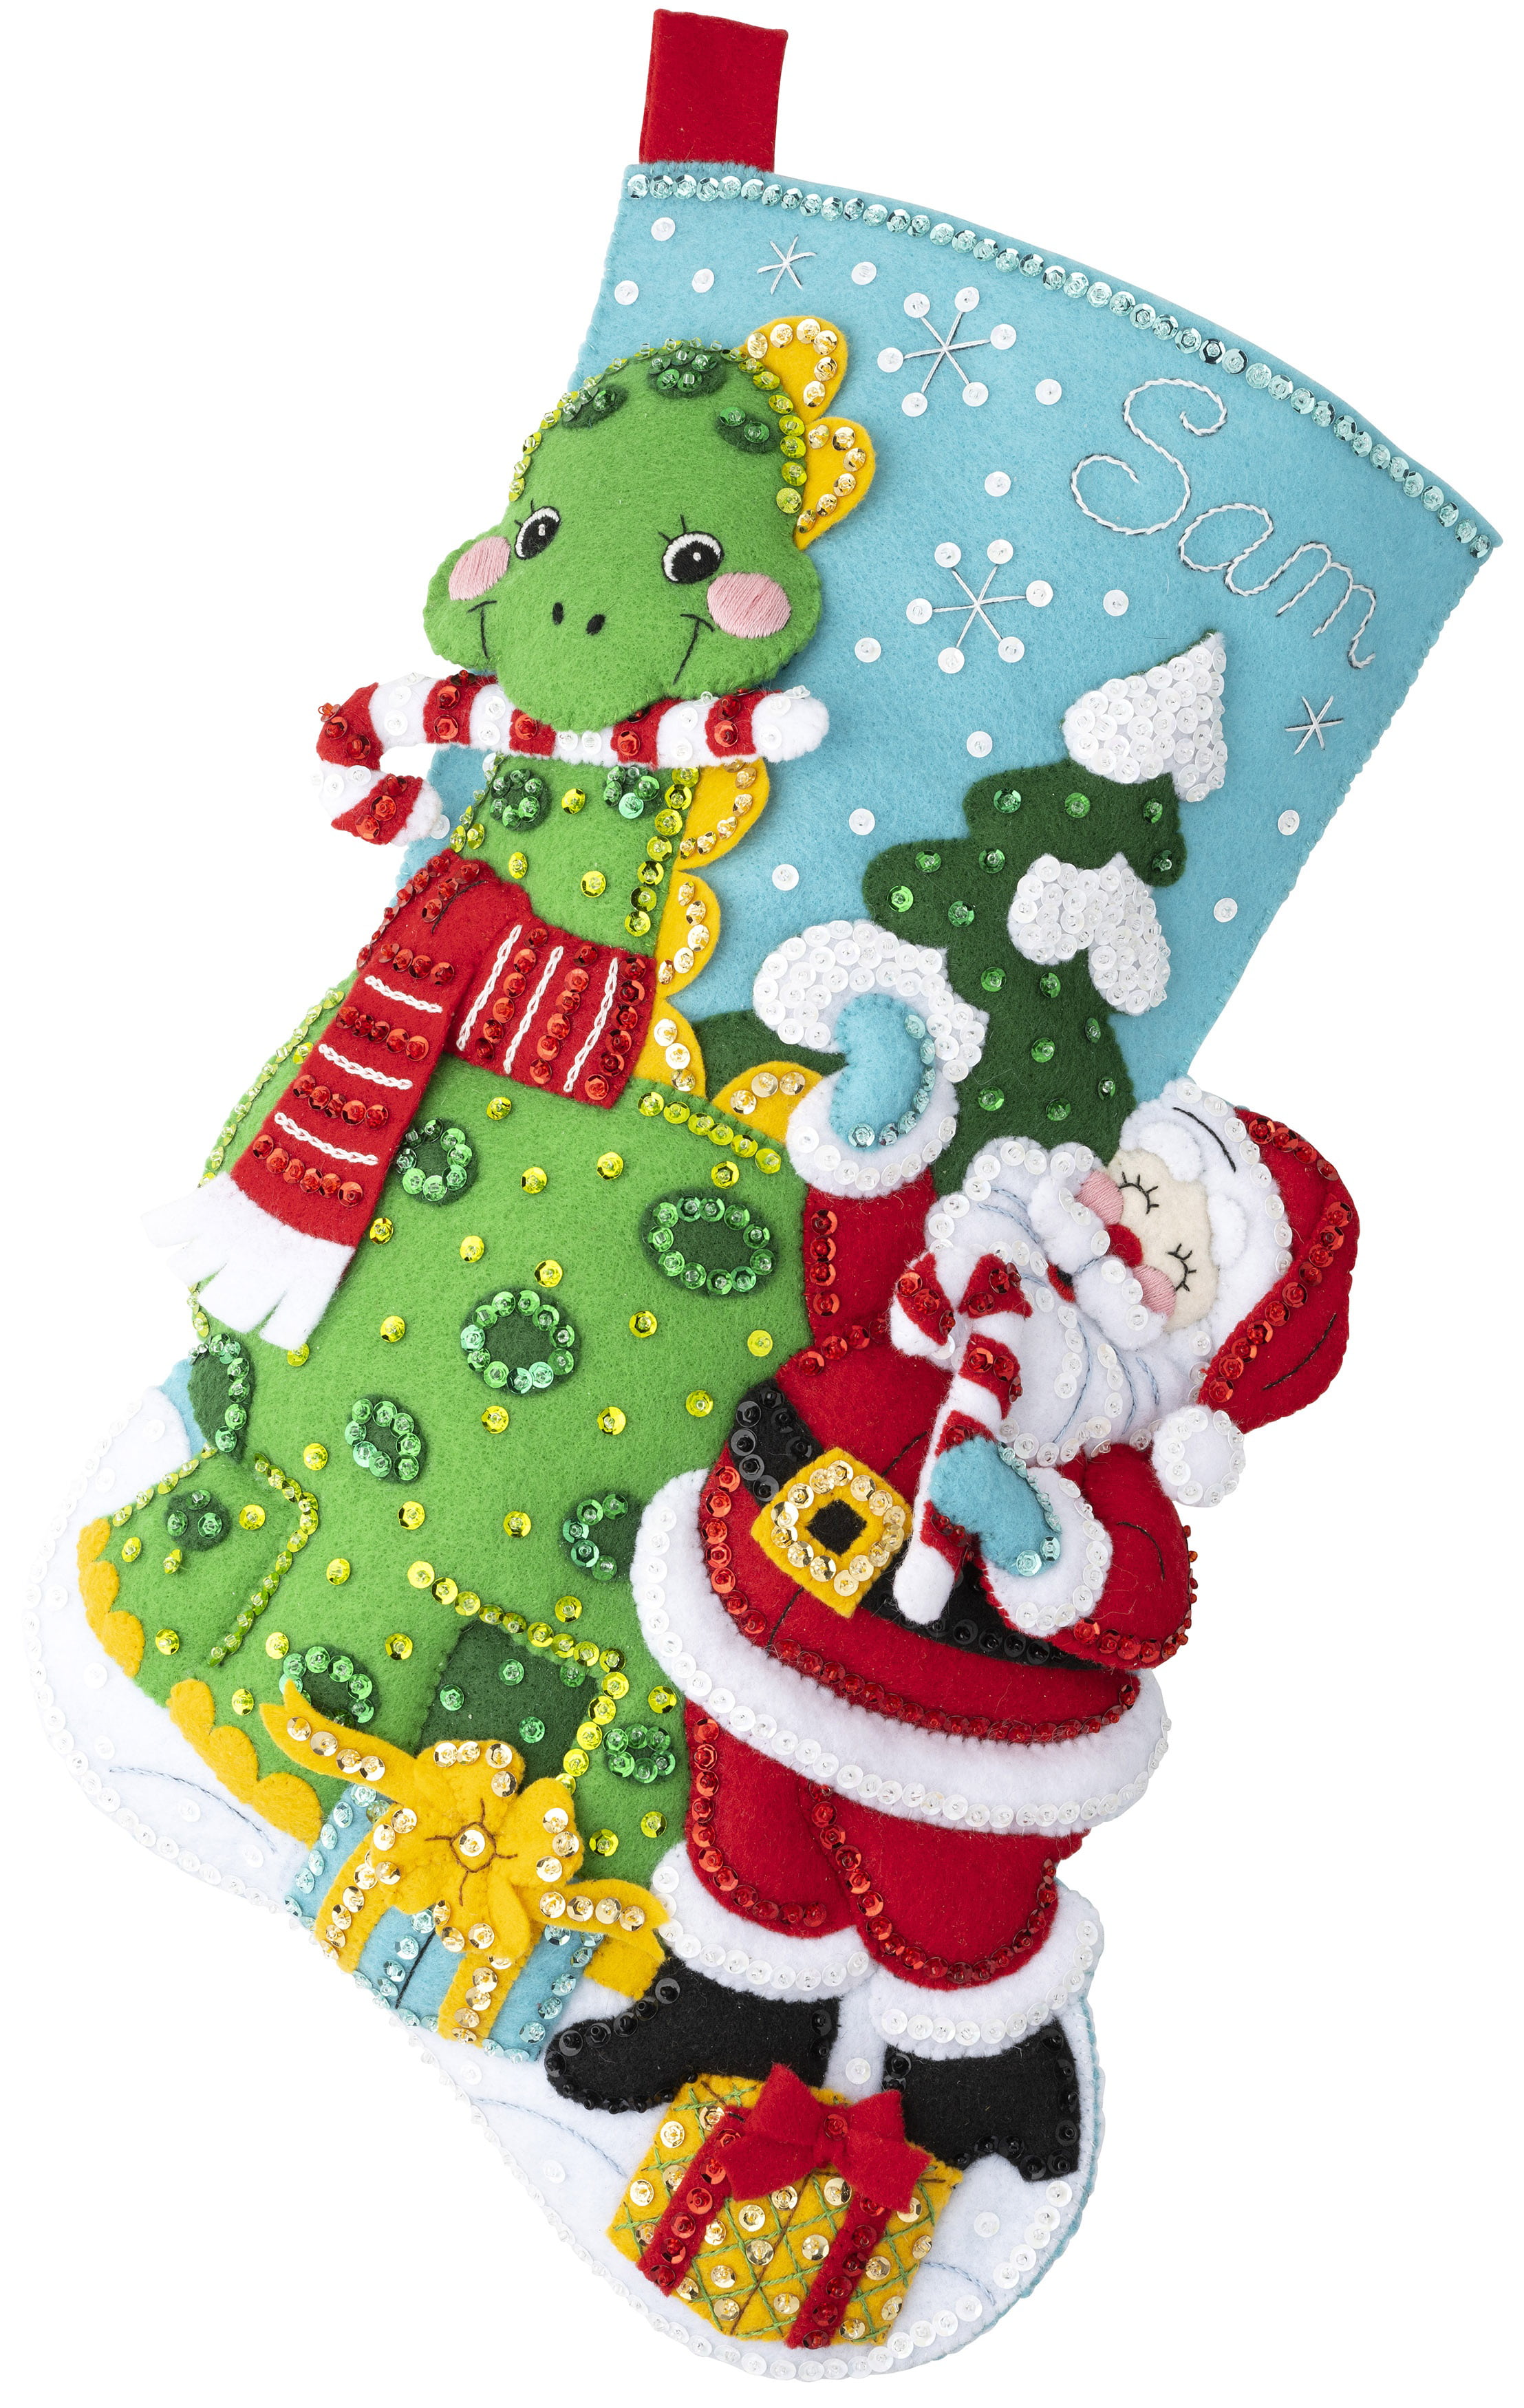 NEW Bucilla 2010 18 3D Felt Christmas In Oz Stocking Kit 86200